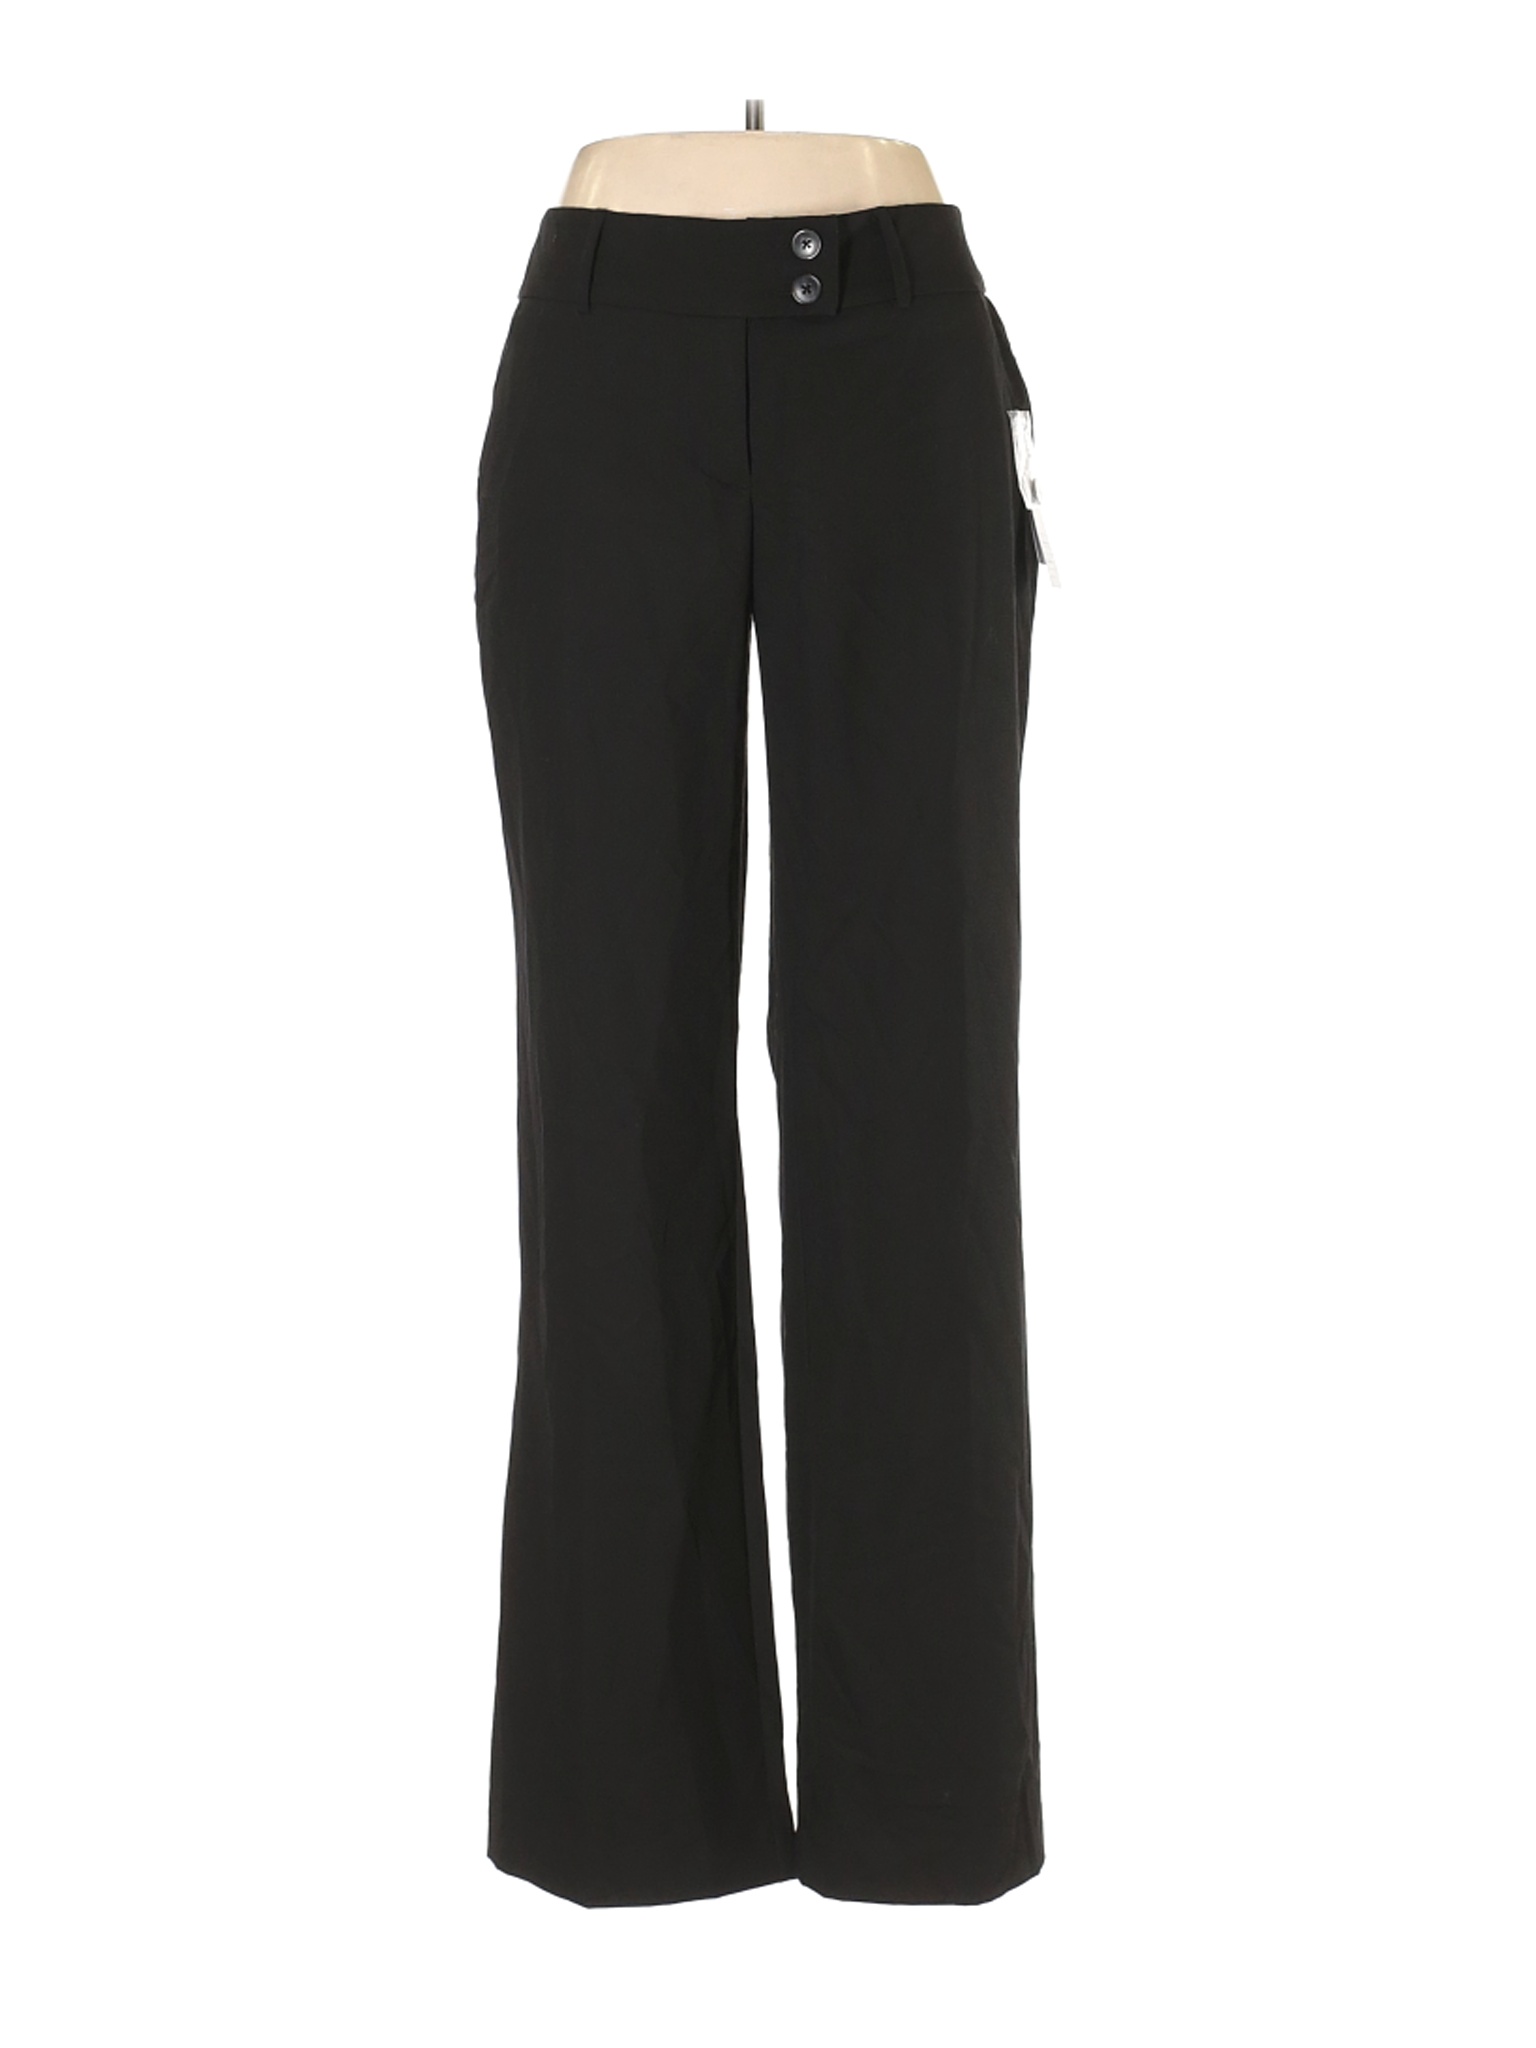 NWT Apt. 9 Women Black Dress Pants 12 | eBay